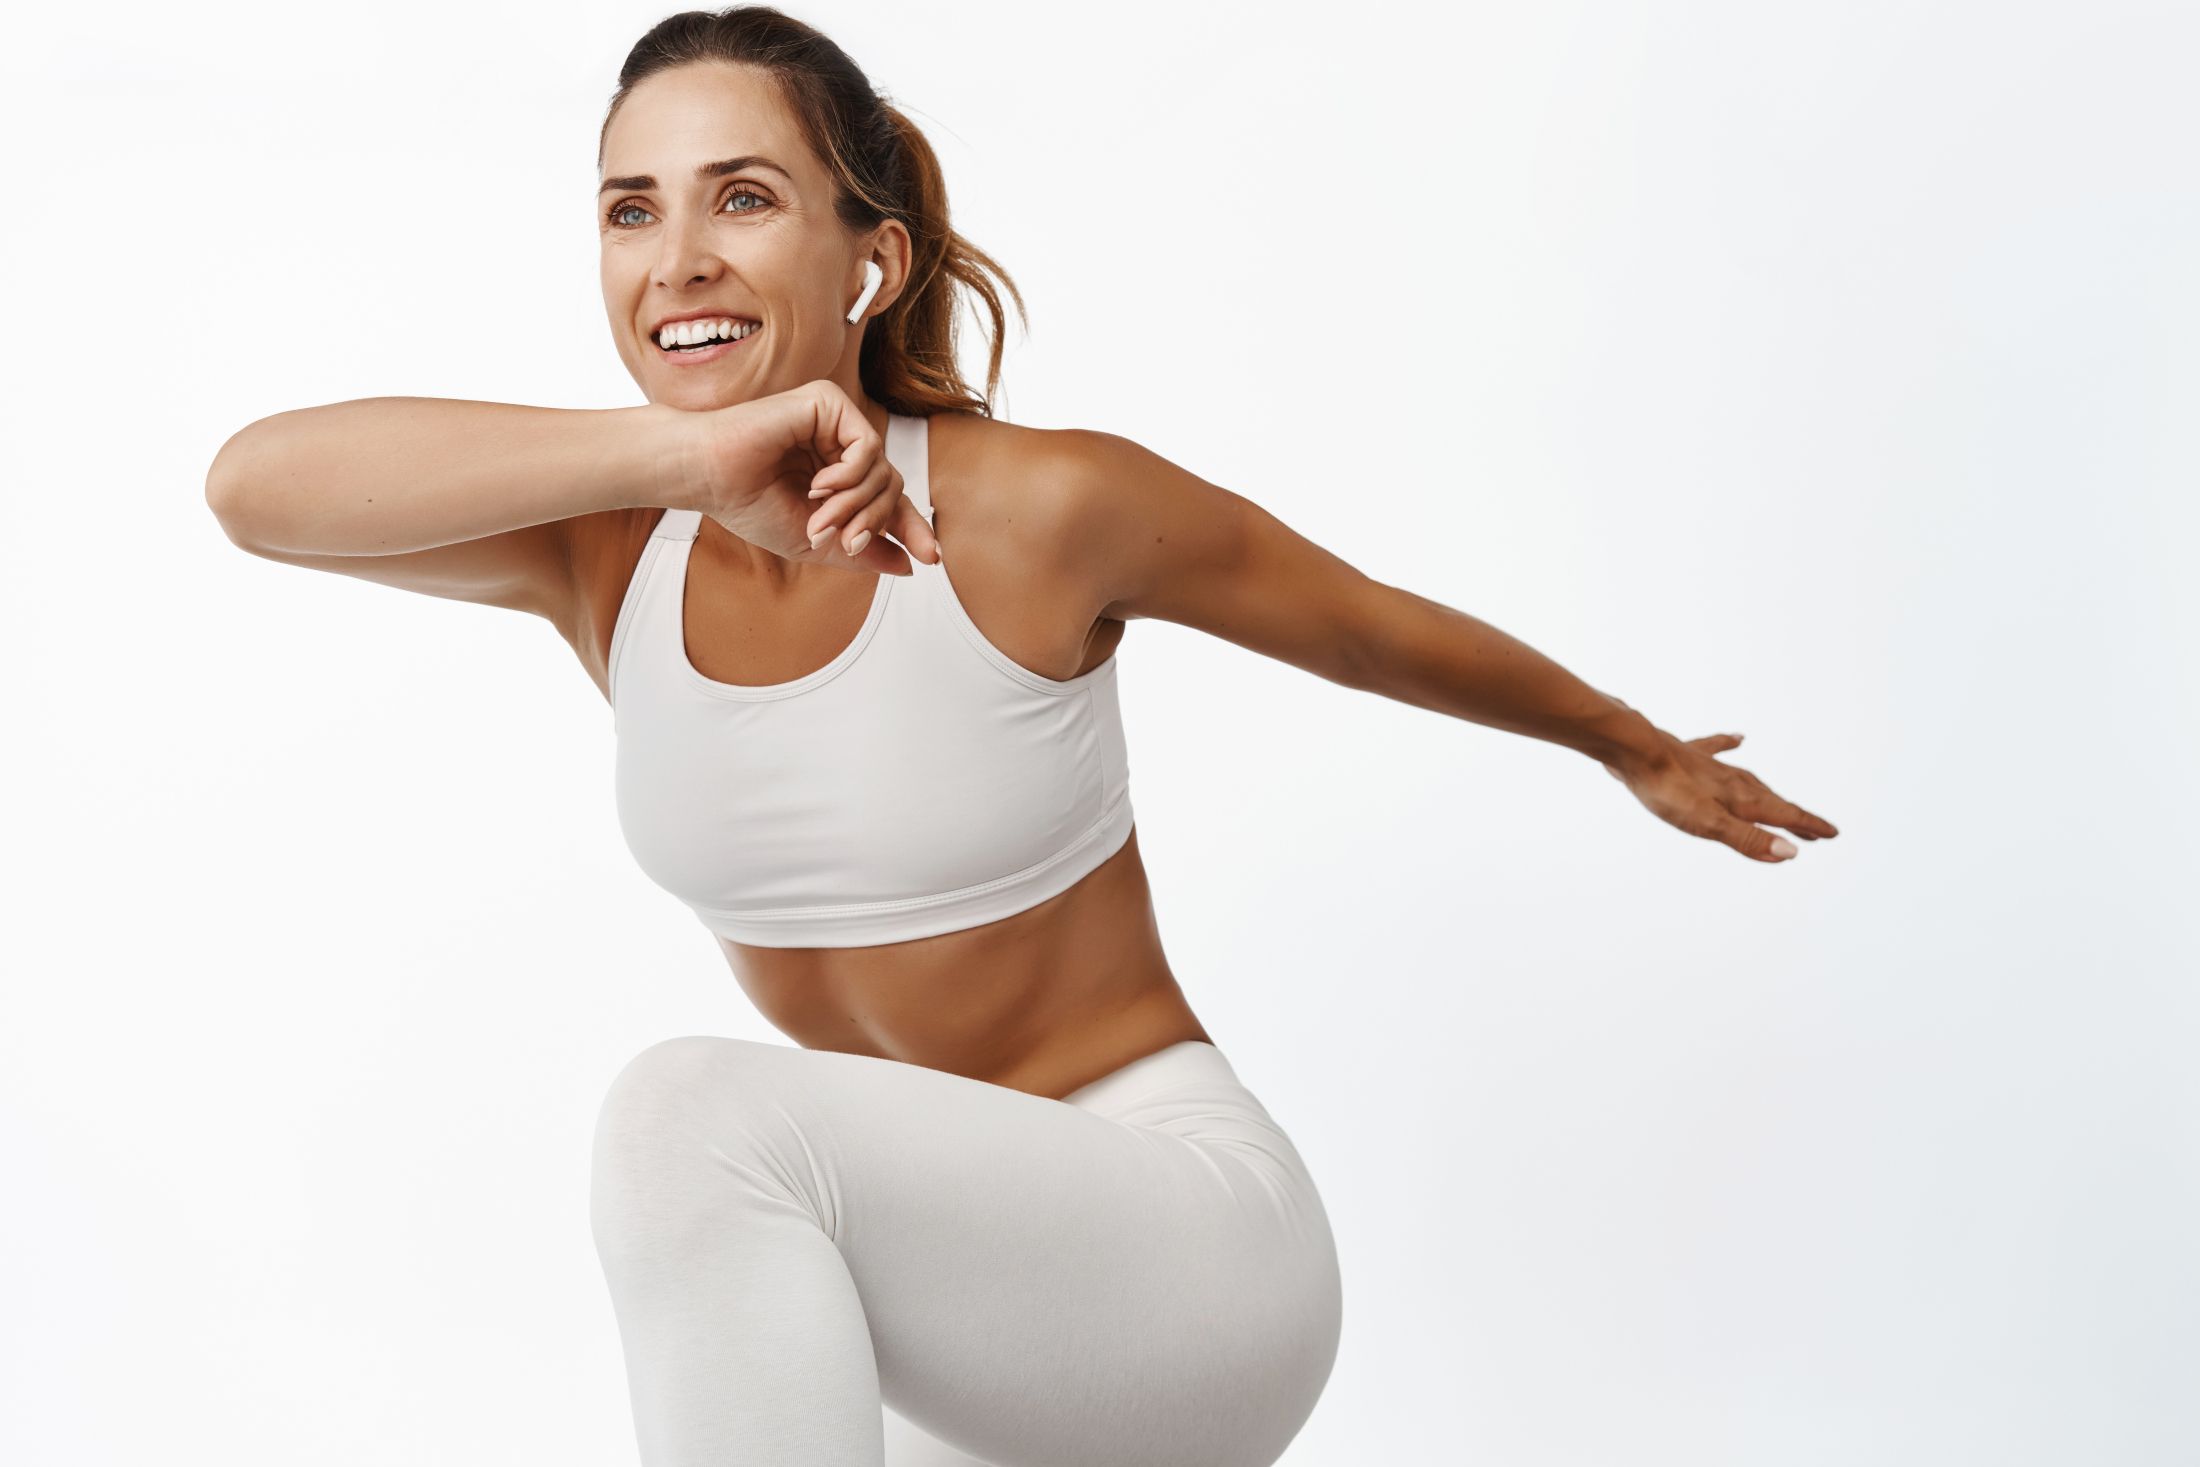 portrait-of-sportswoman-stretching-body-exercising-doing-fitness-leg-raise-and-smiling-running-standing-over-white-background.jpg